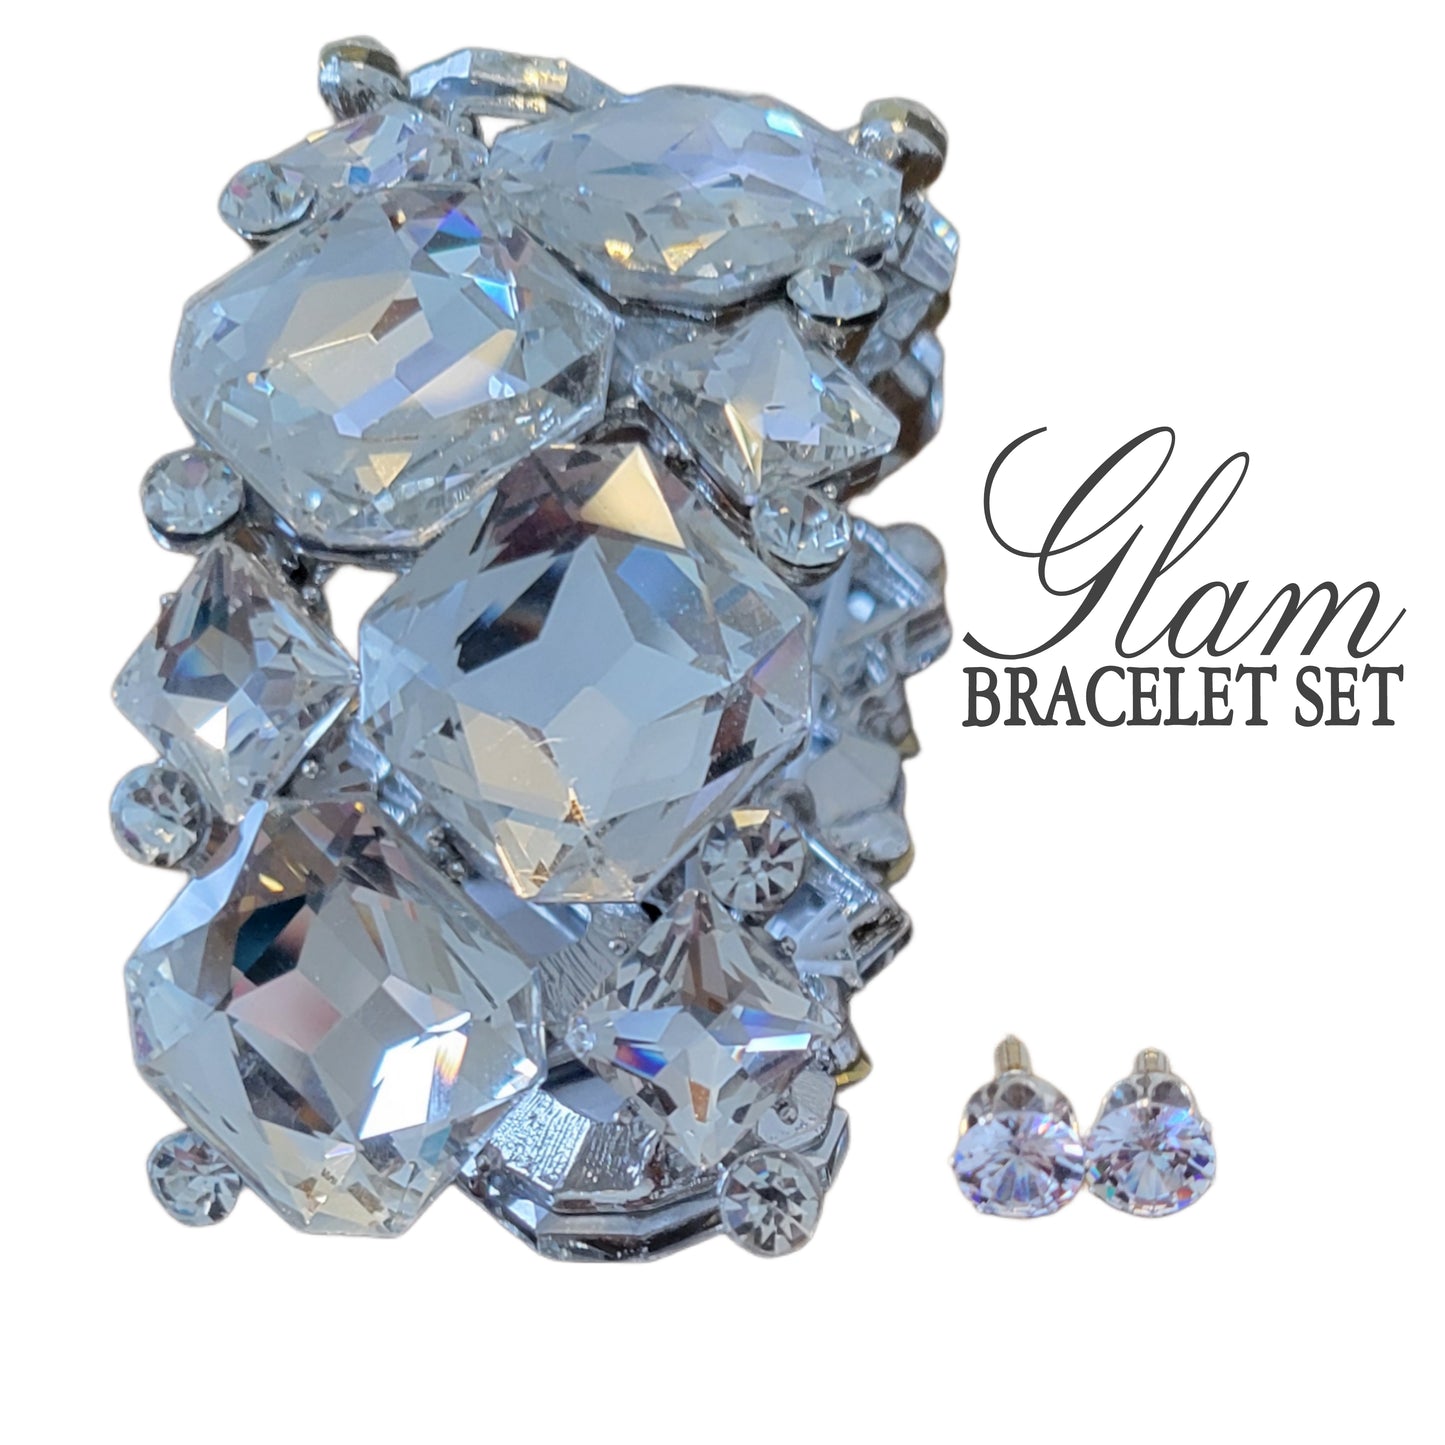 Glam Bracelet Set